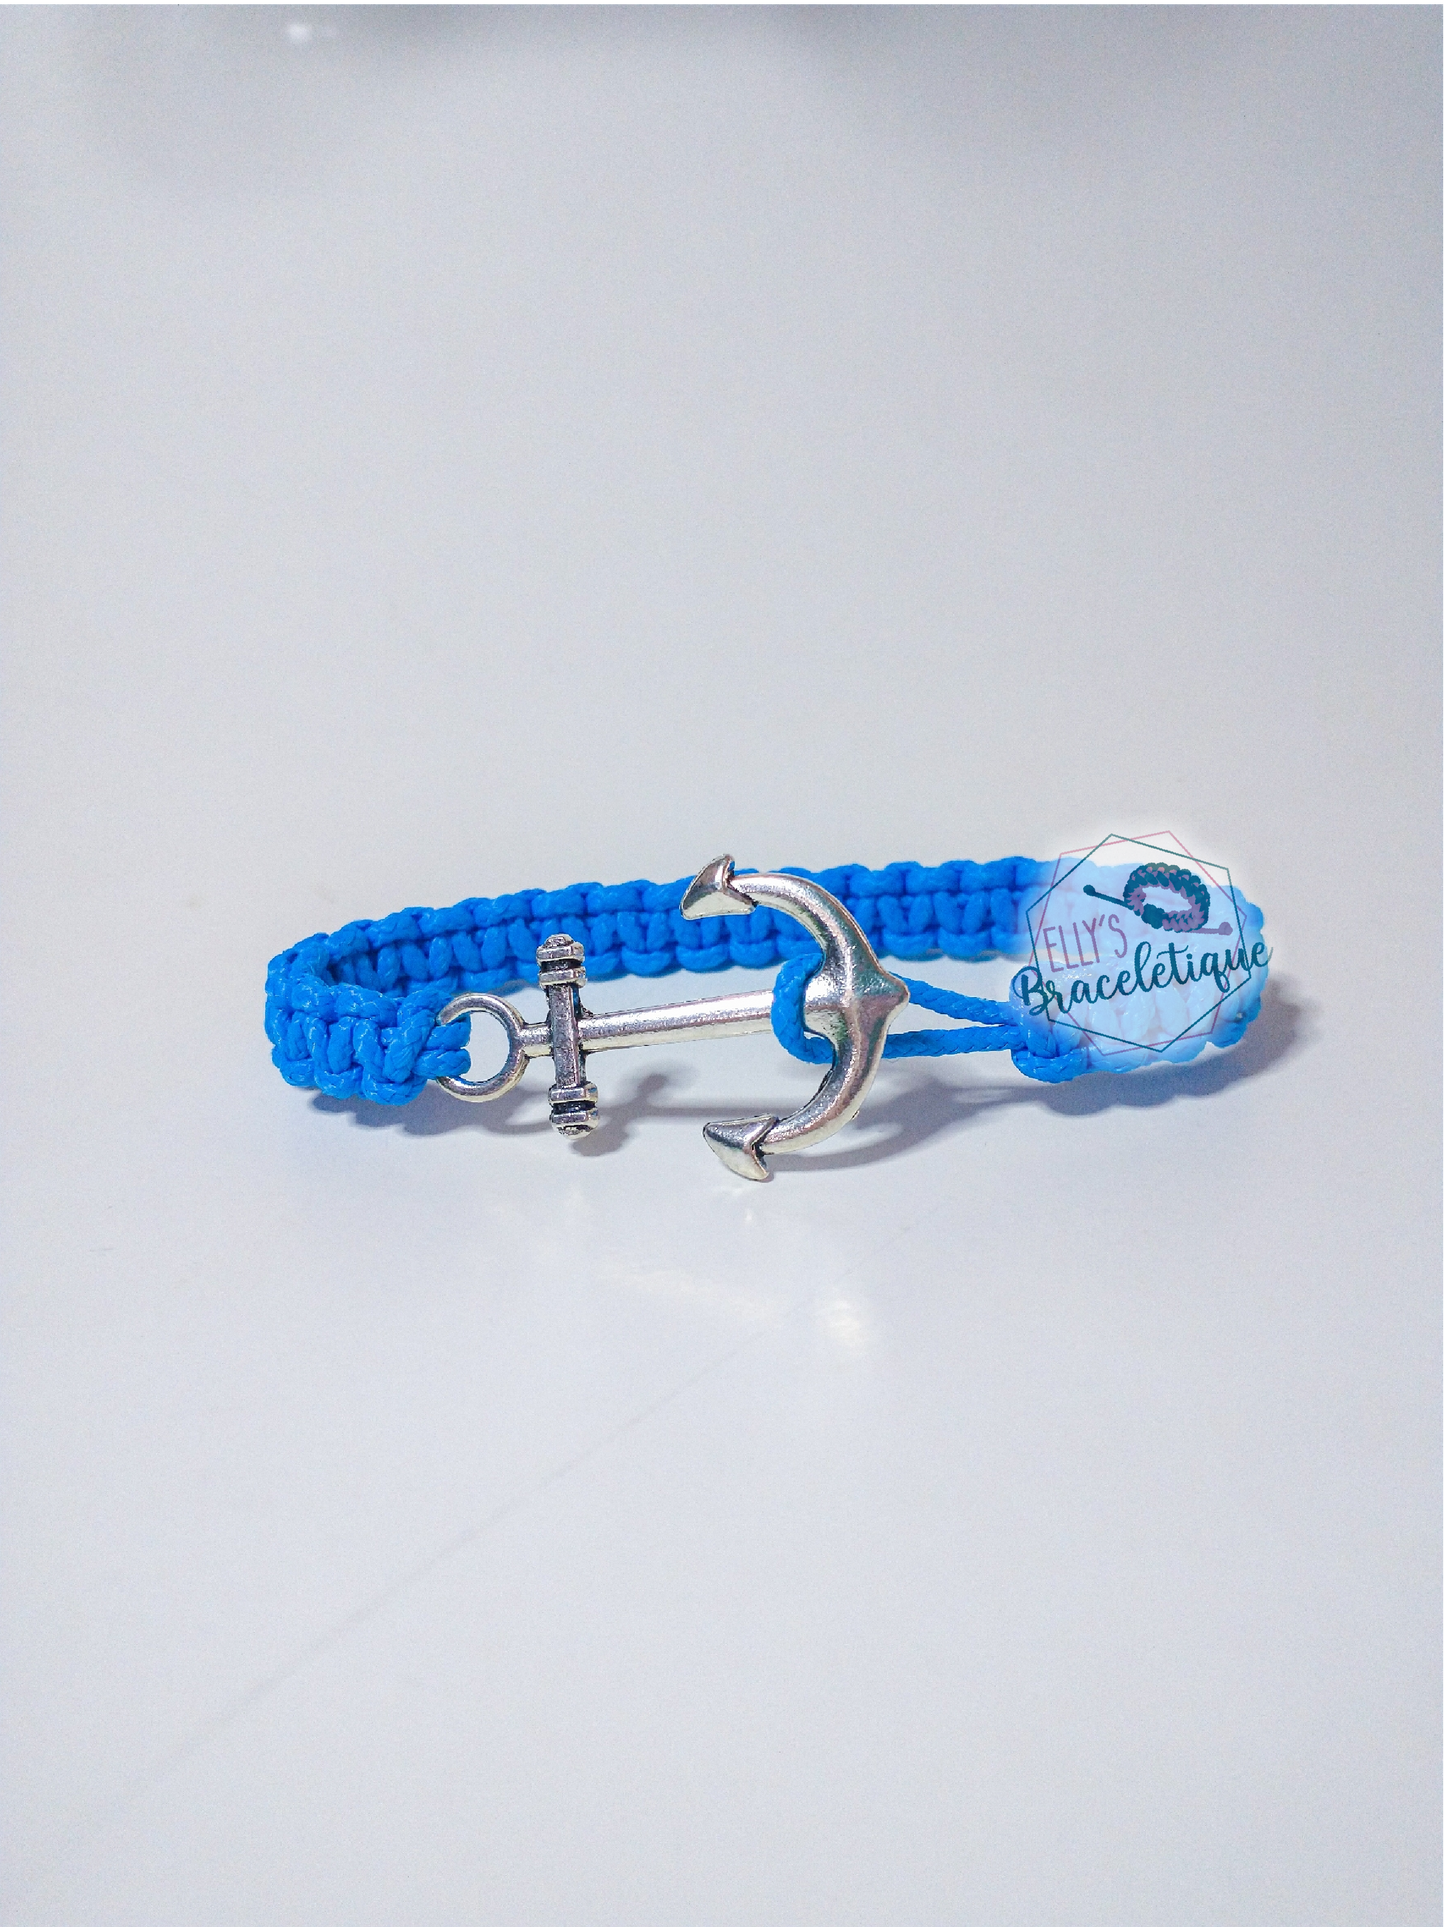 Hook and Anchor bracelets